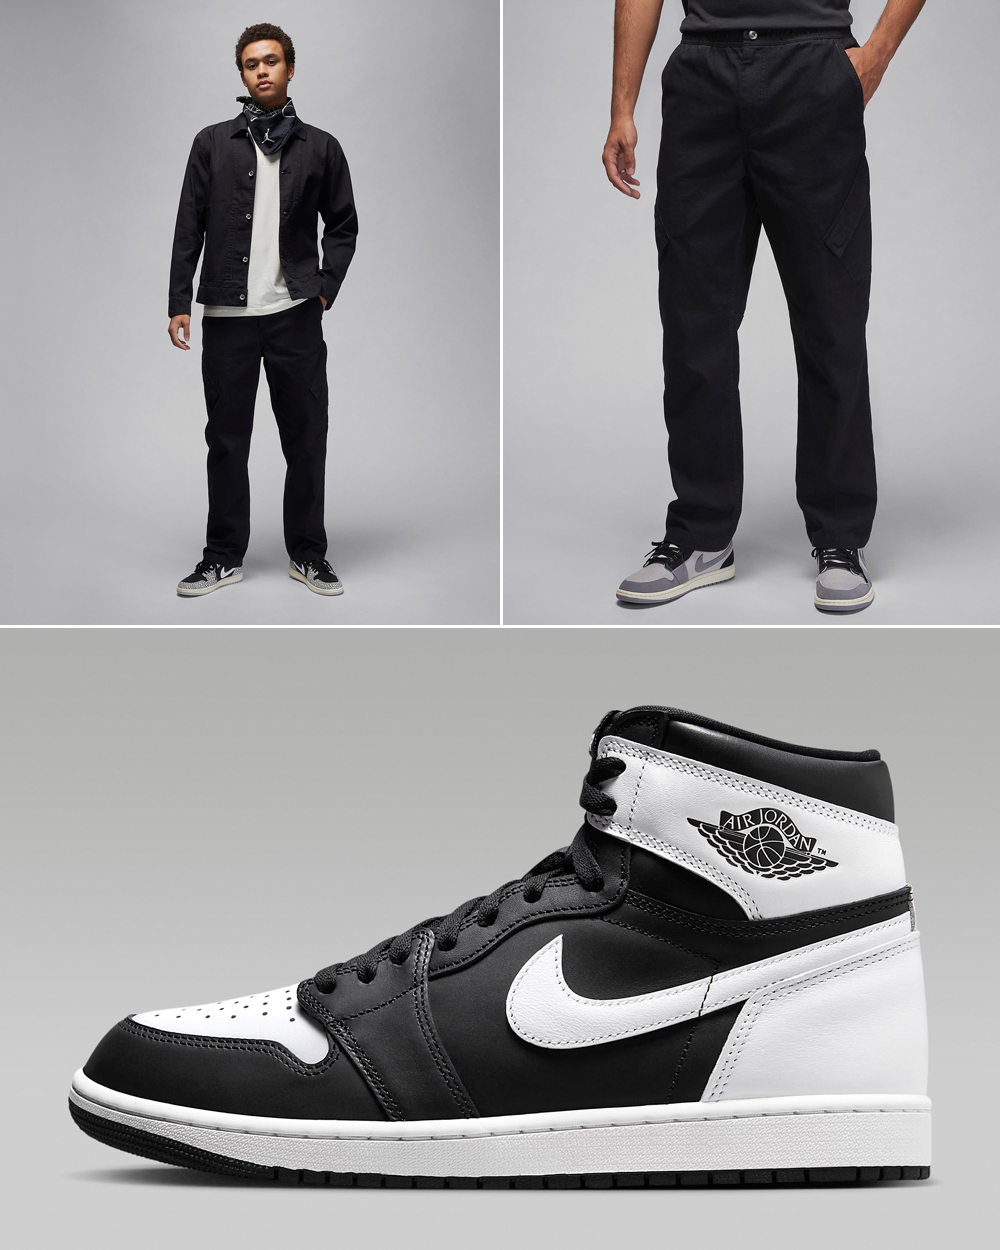 Air-Jordan-1-High-Black-White-Pants-Jacket-Outfit